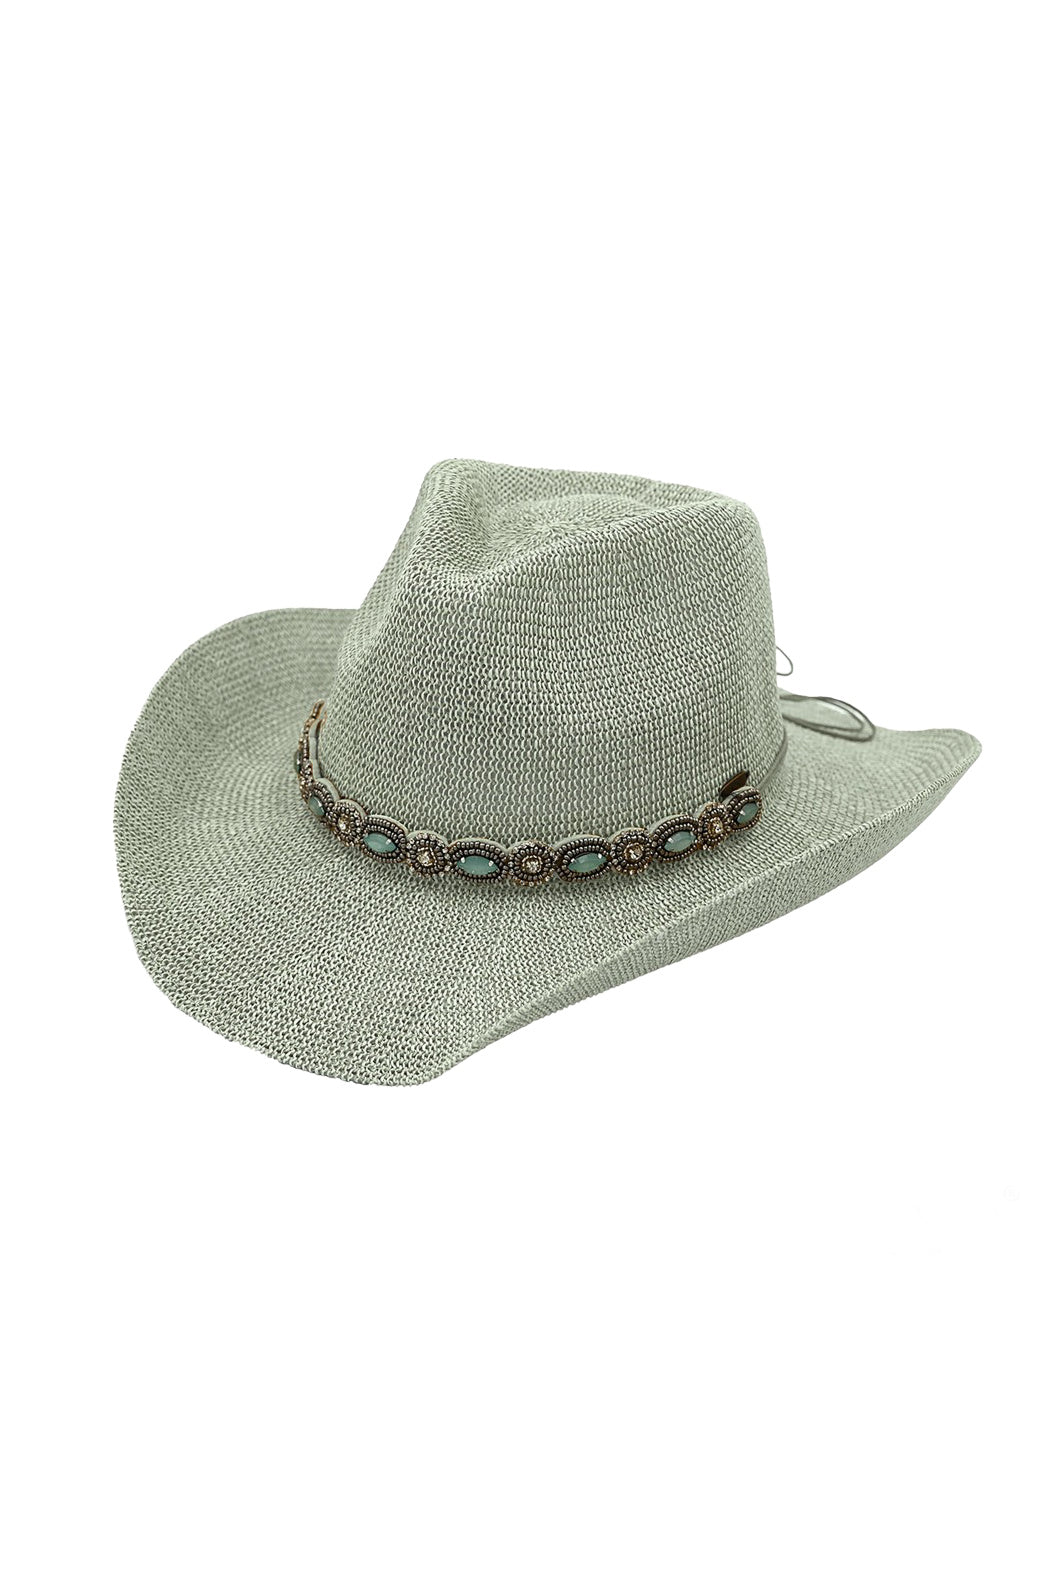 Jeweled Cowgirl Straw Hat